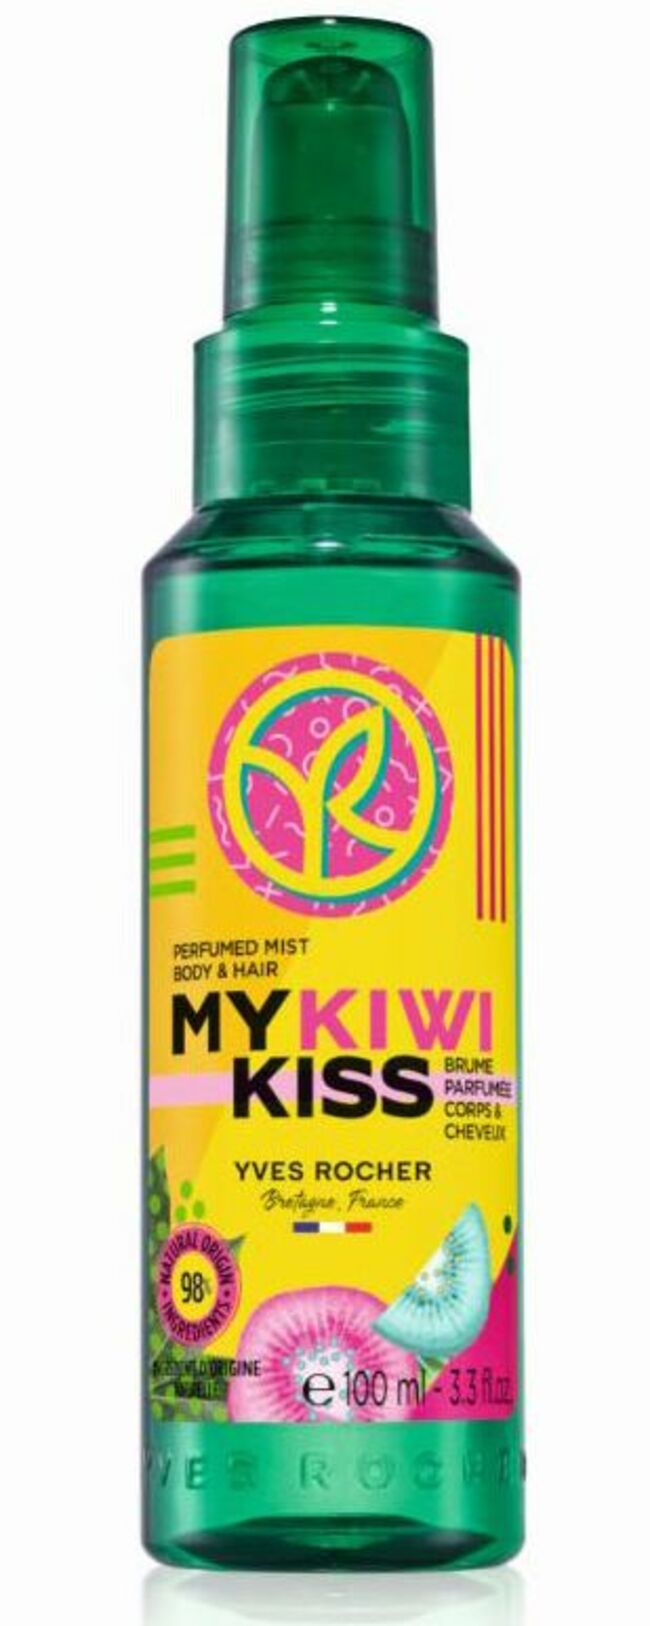 Brume parfumée corps et cheveux My Kiwi Kiss, Yves Rocher, 9,95€, 100ml.